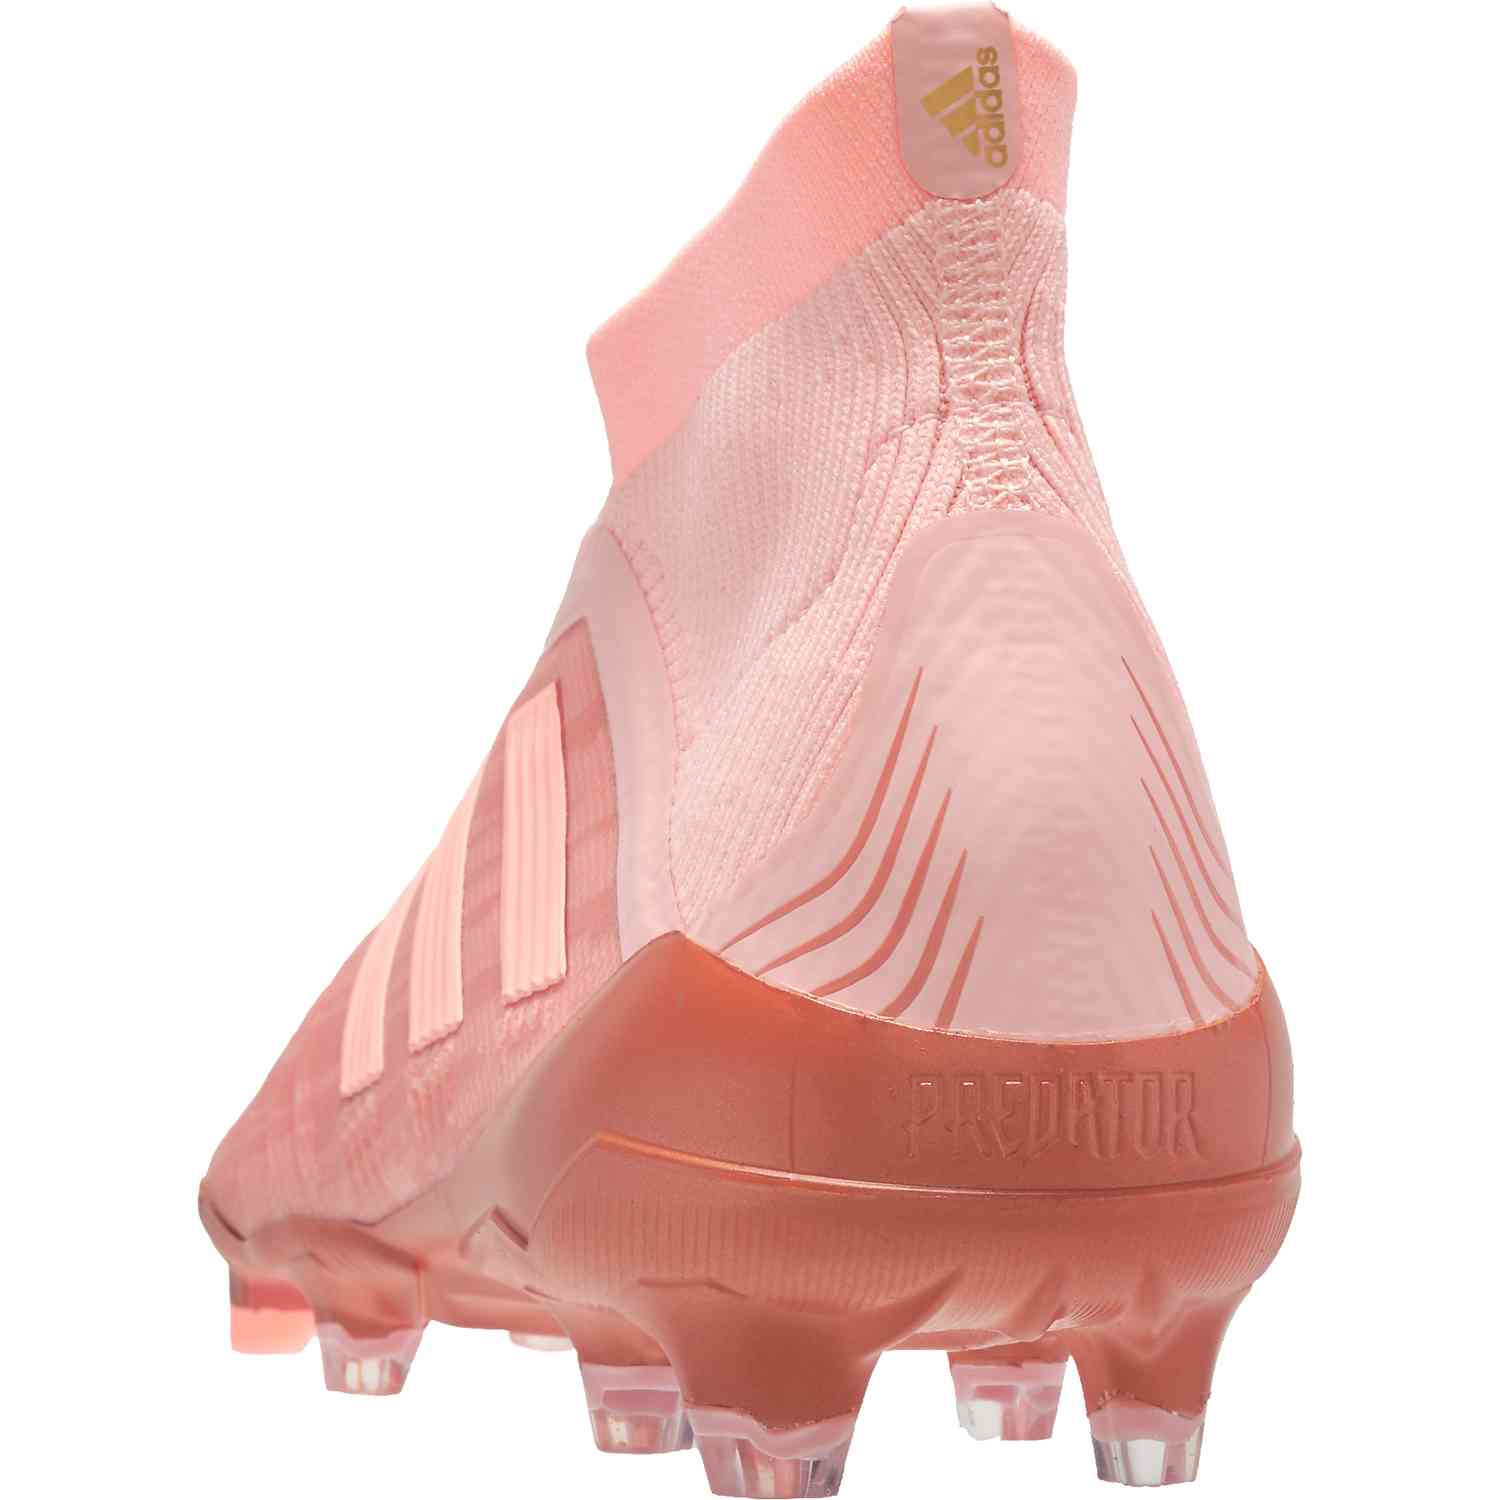 adidas predator pink shoes